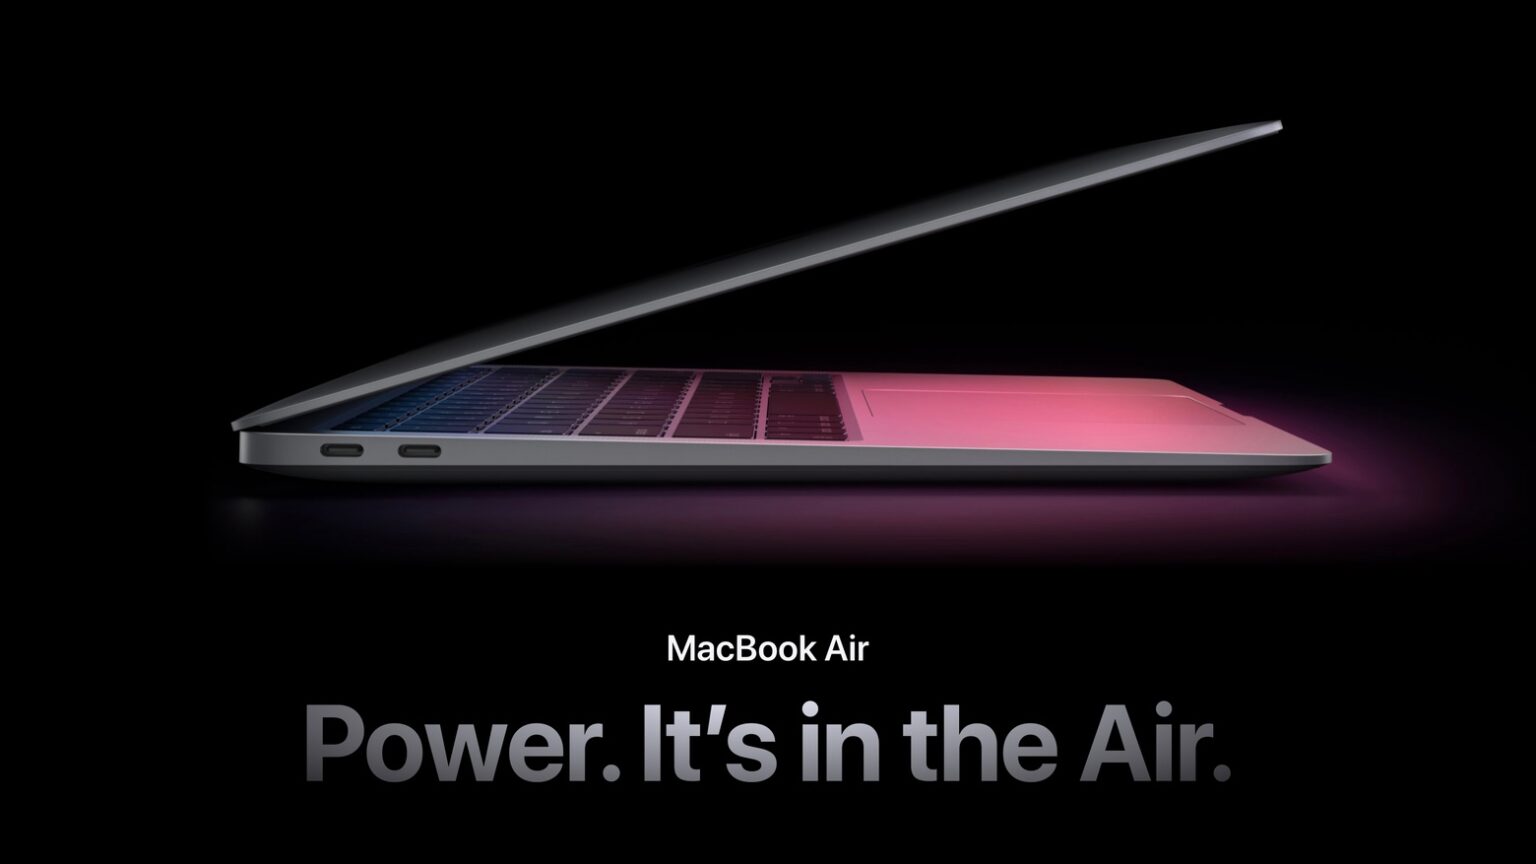 MacBook Air power